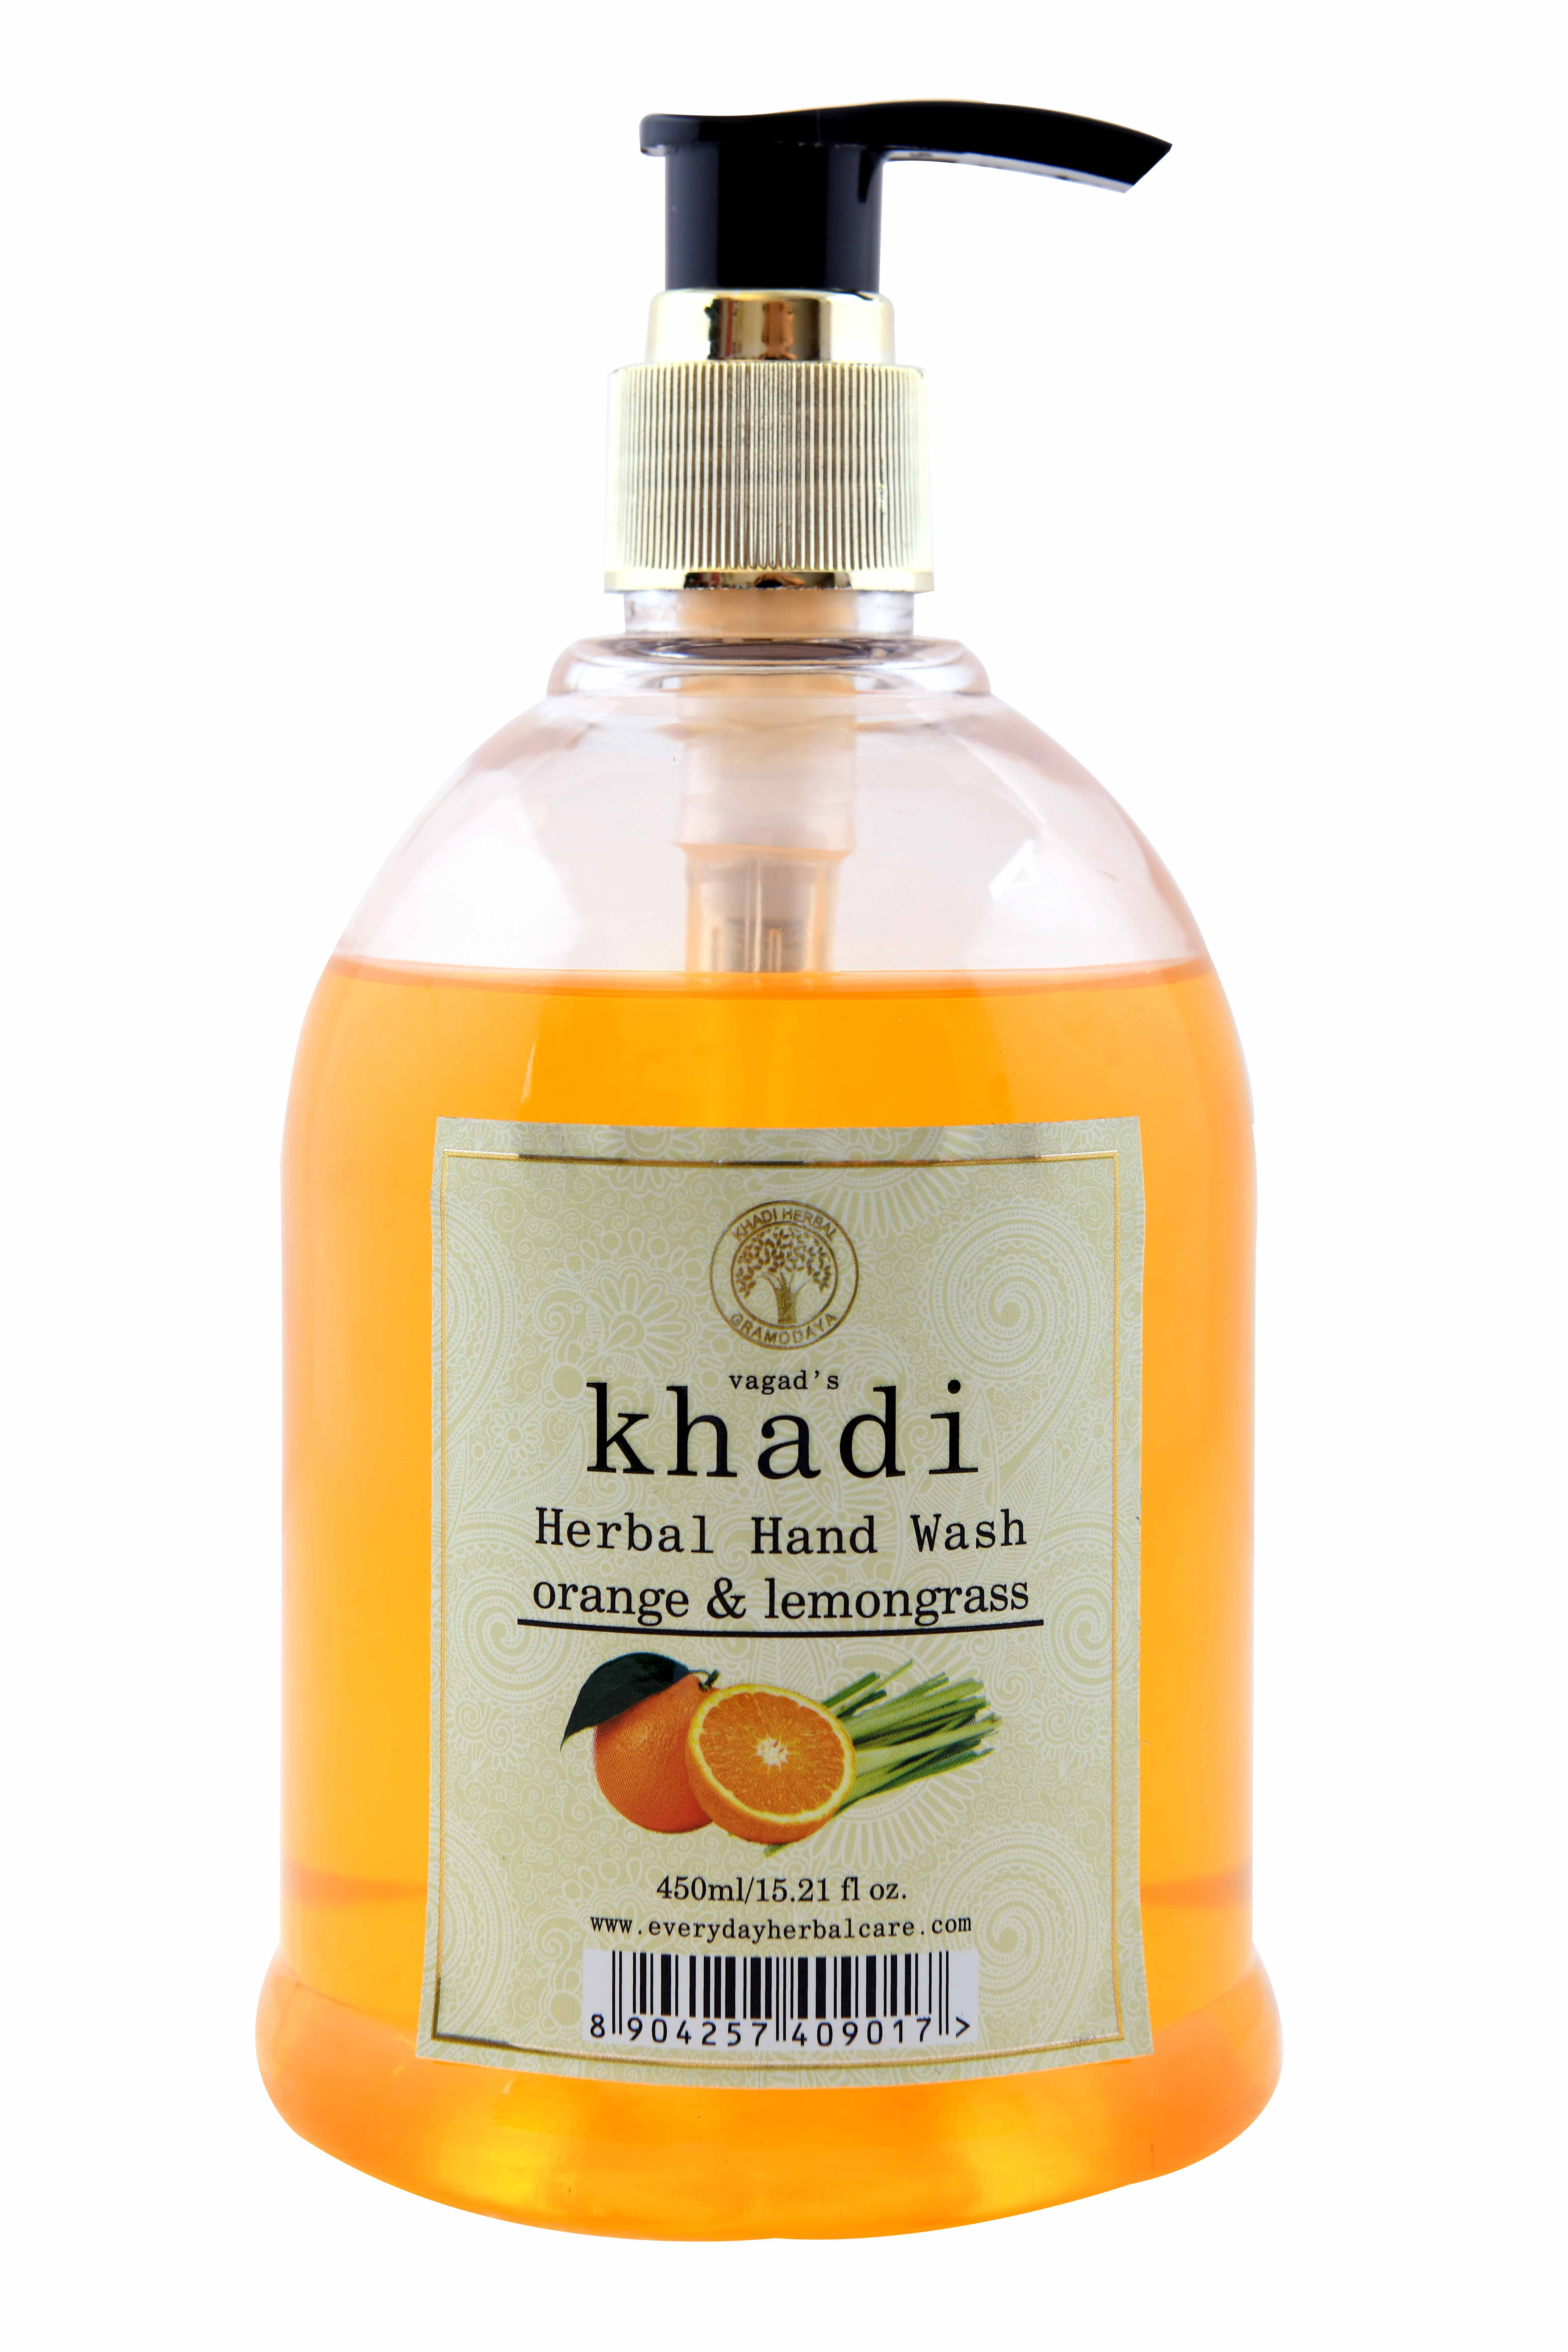 Buy Vagad's Khadi Orange And Lemongrass Herbal Handwash at Best Price Online